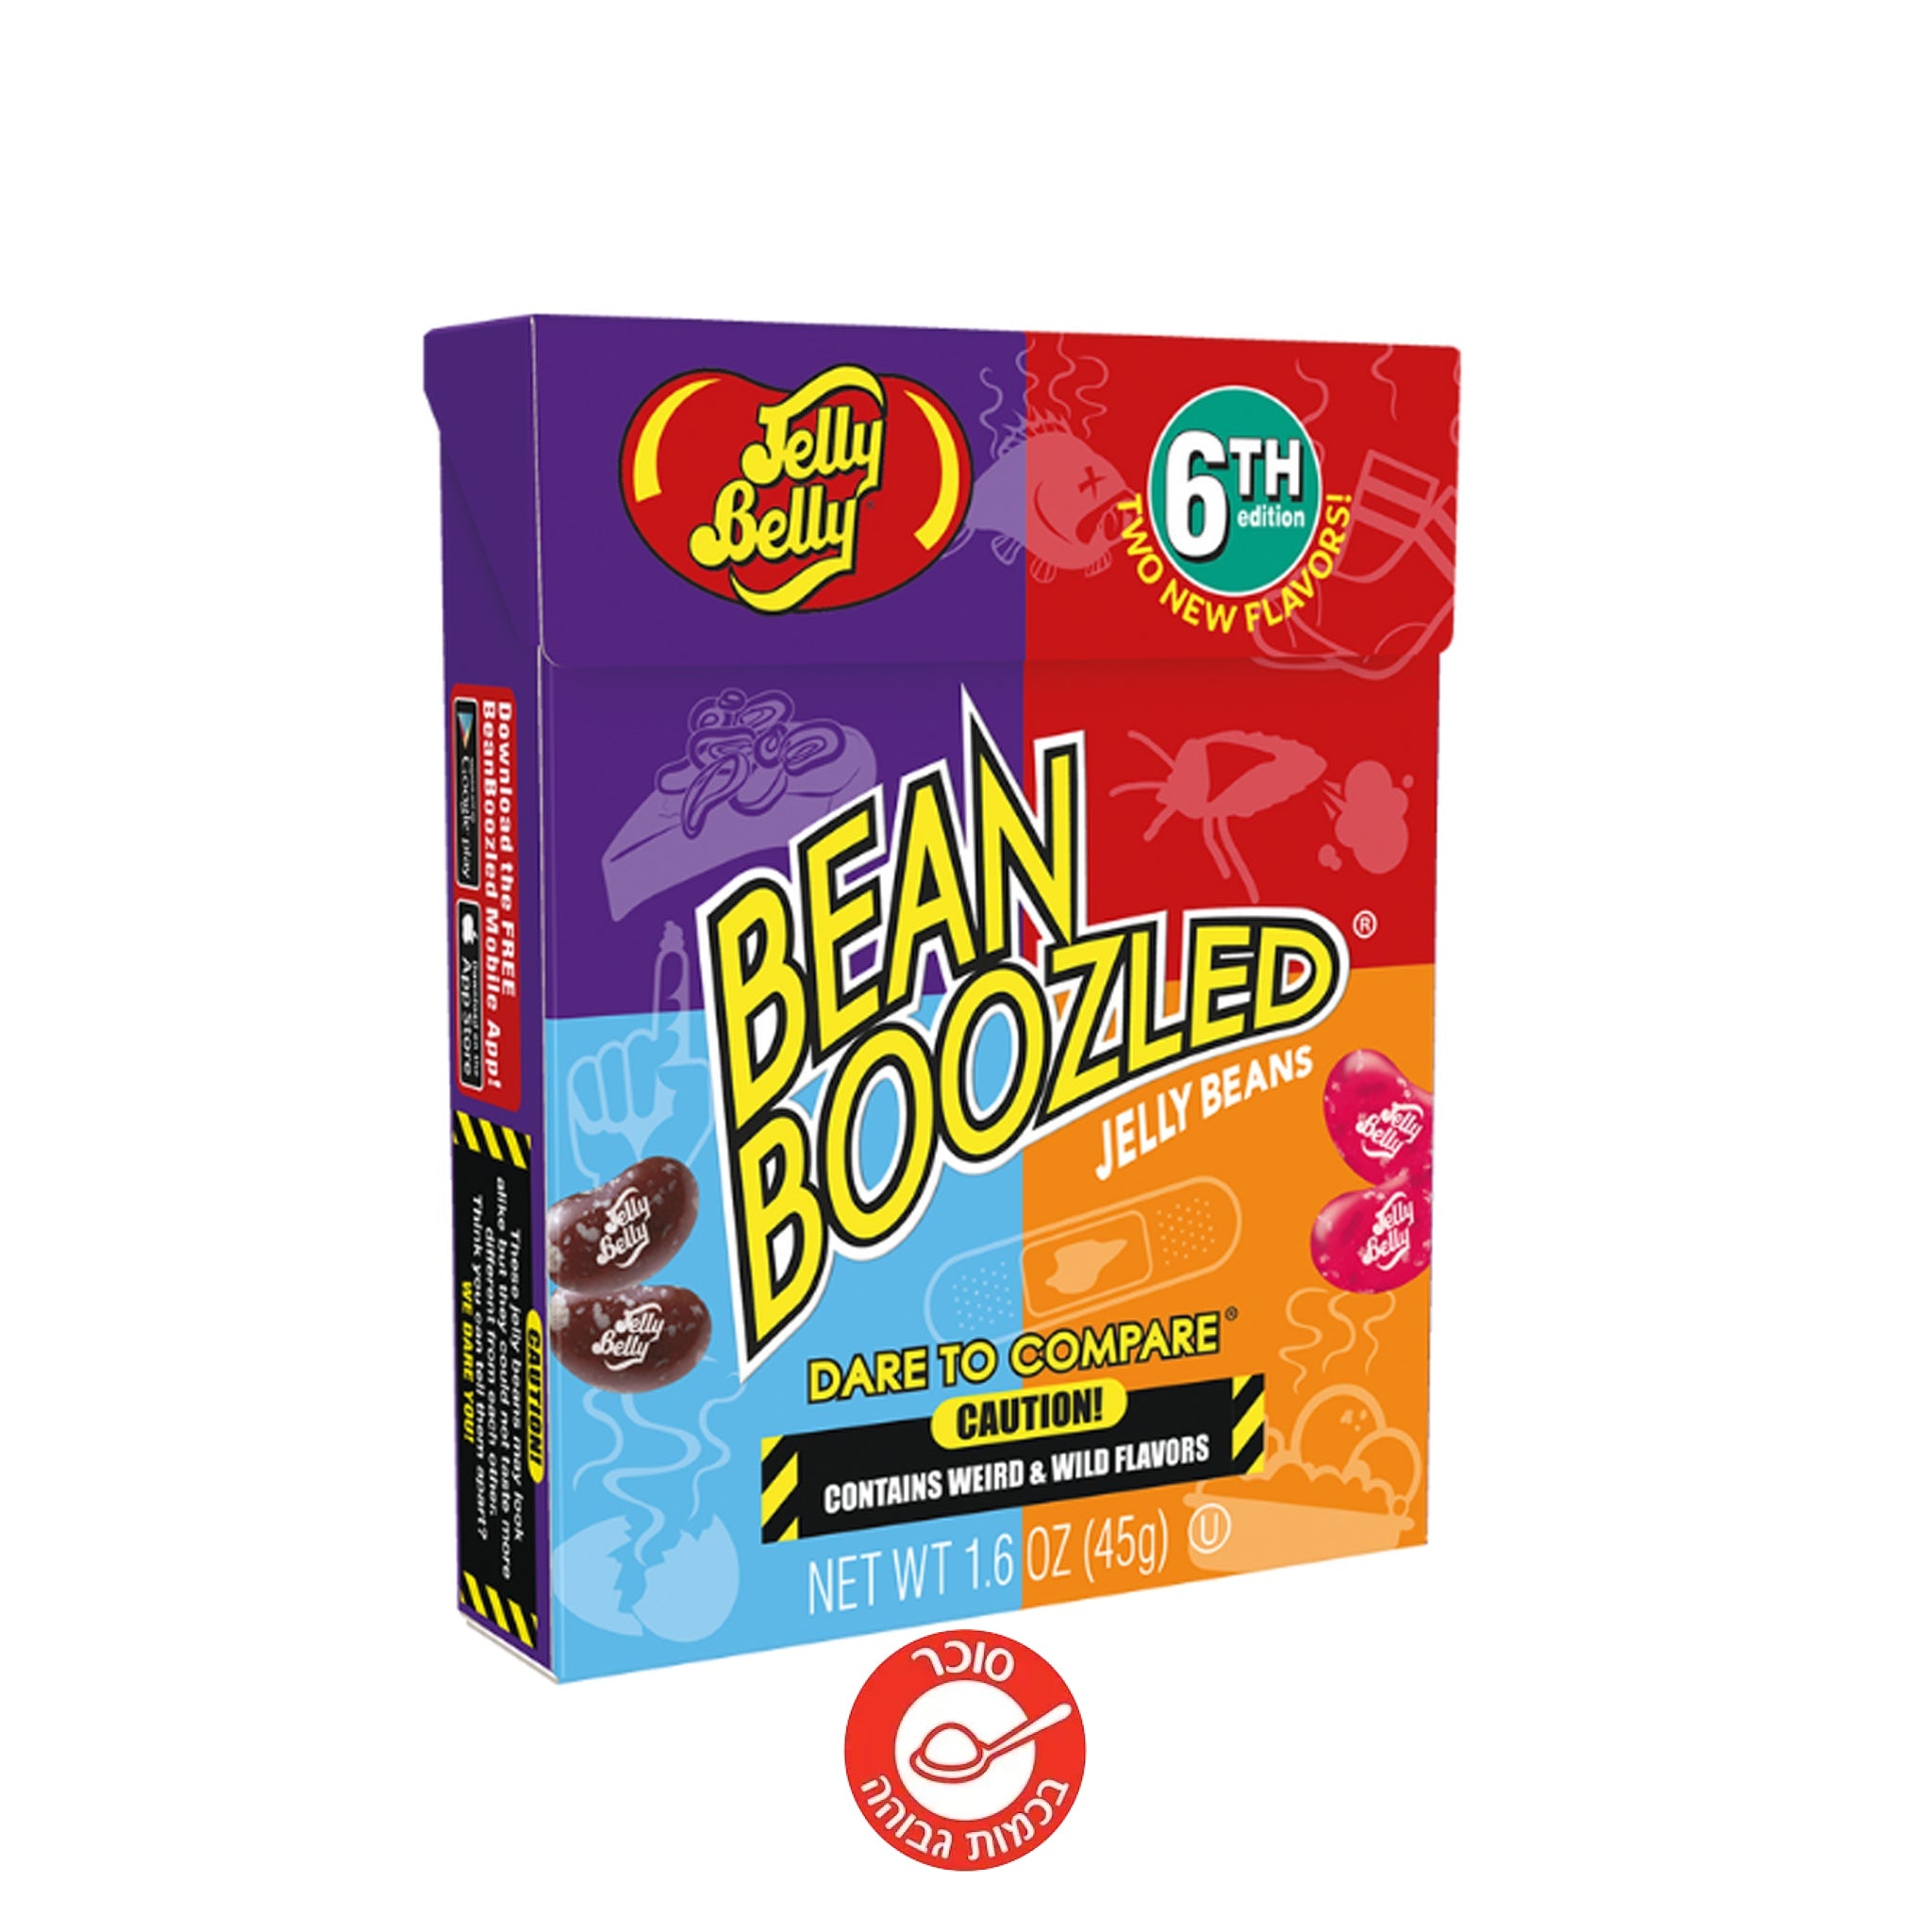 Jelly Belly Bean Boozled 6th ג'לי מבחן אומץ מהדורה שישית